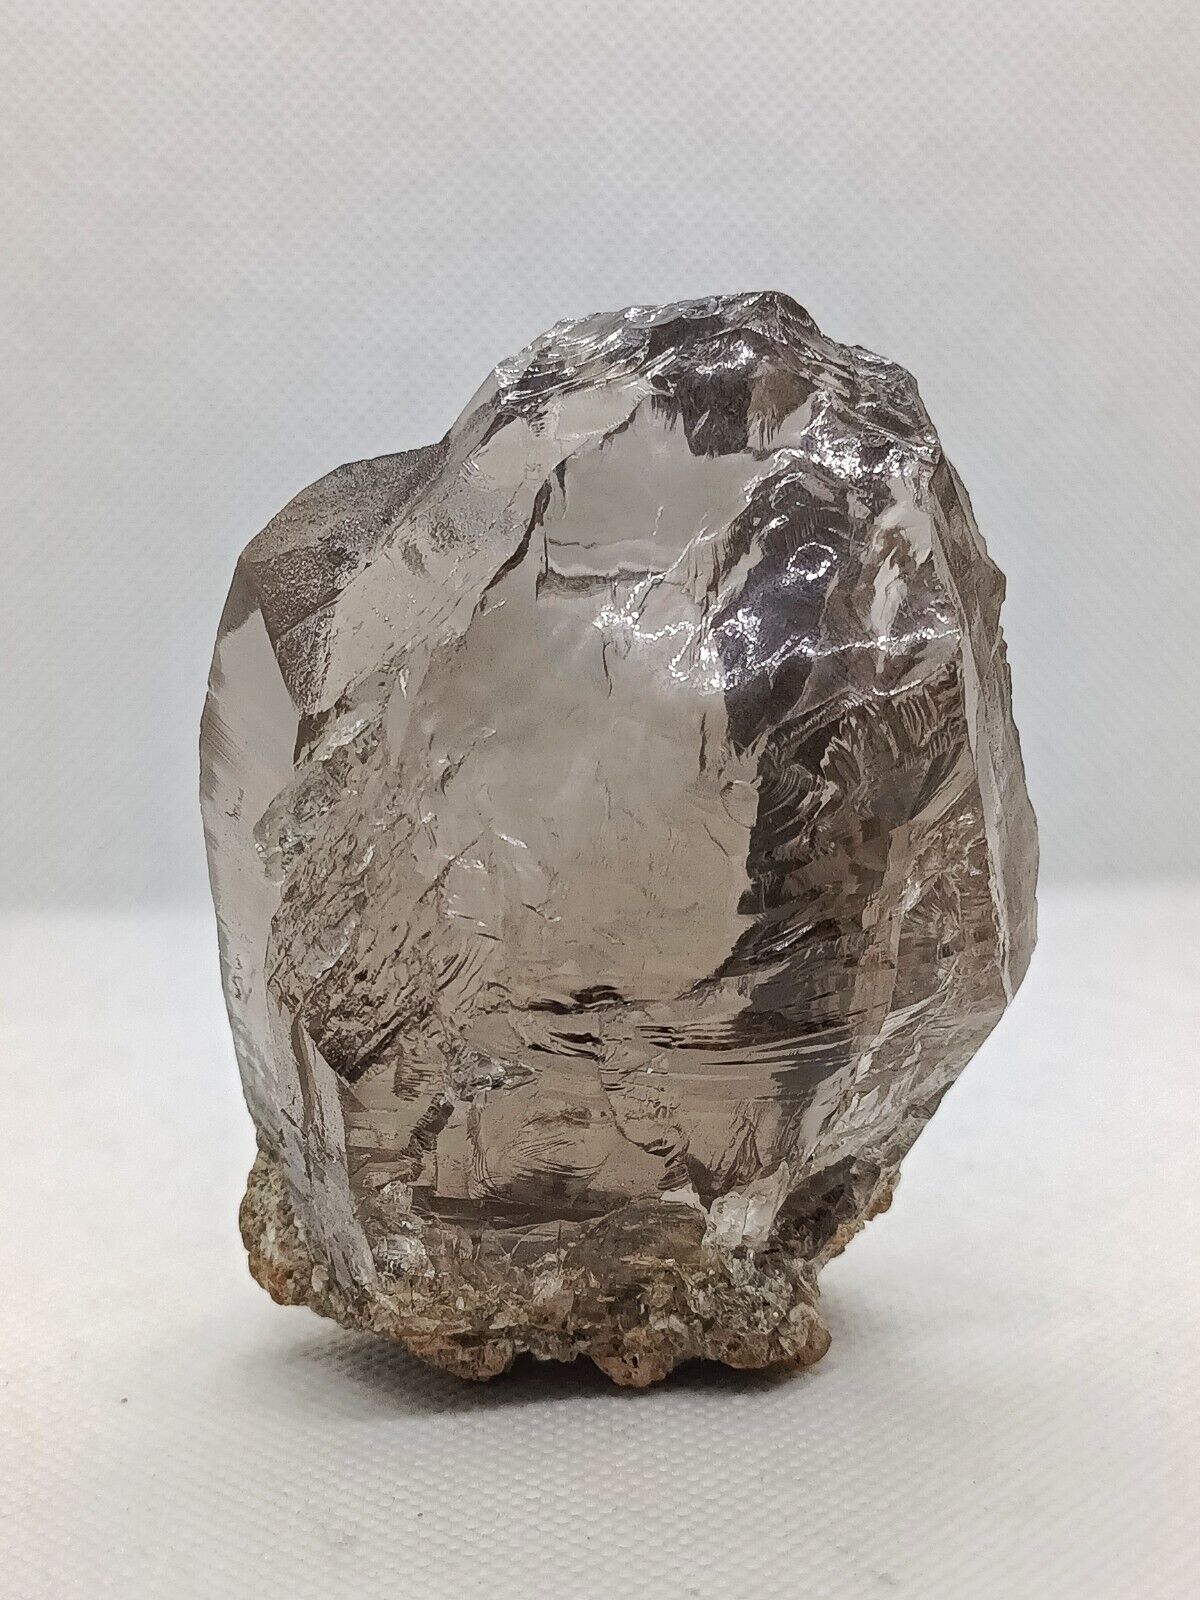 Rare 271g Natural Gemstone Rich Color Smoky Quartz Crystal Mineral Specimen